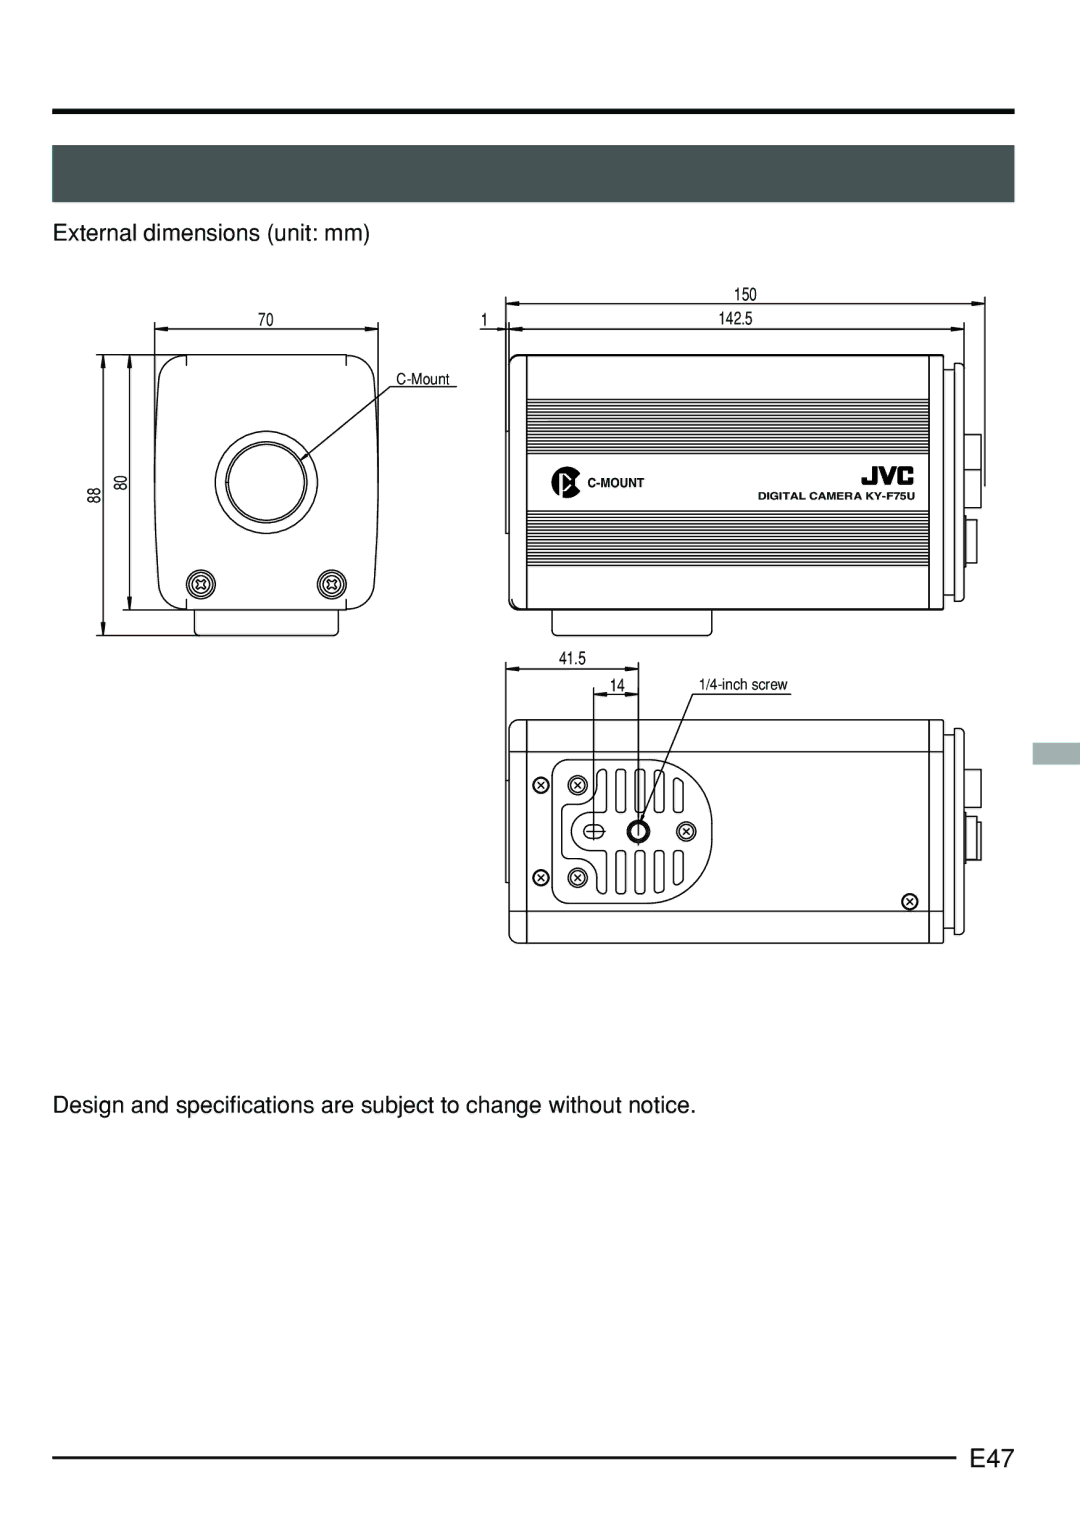 JVC KY-F75 manual E47, External dimensions unit mm 